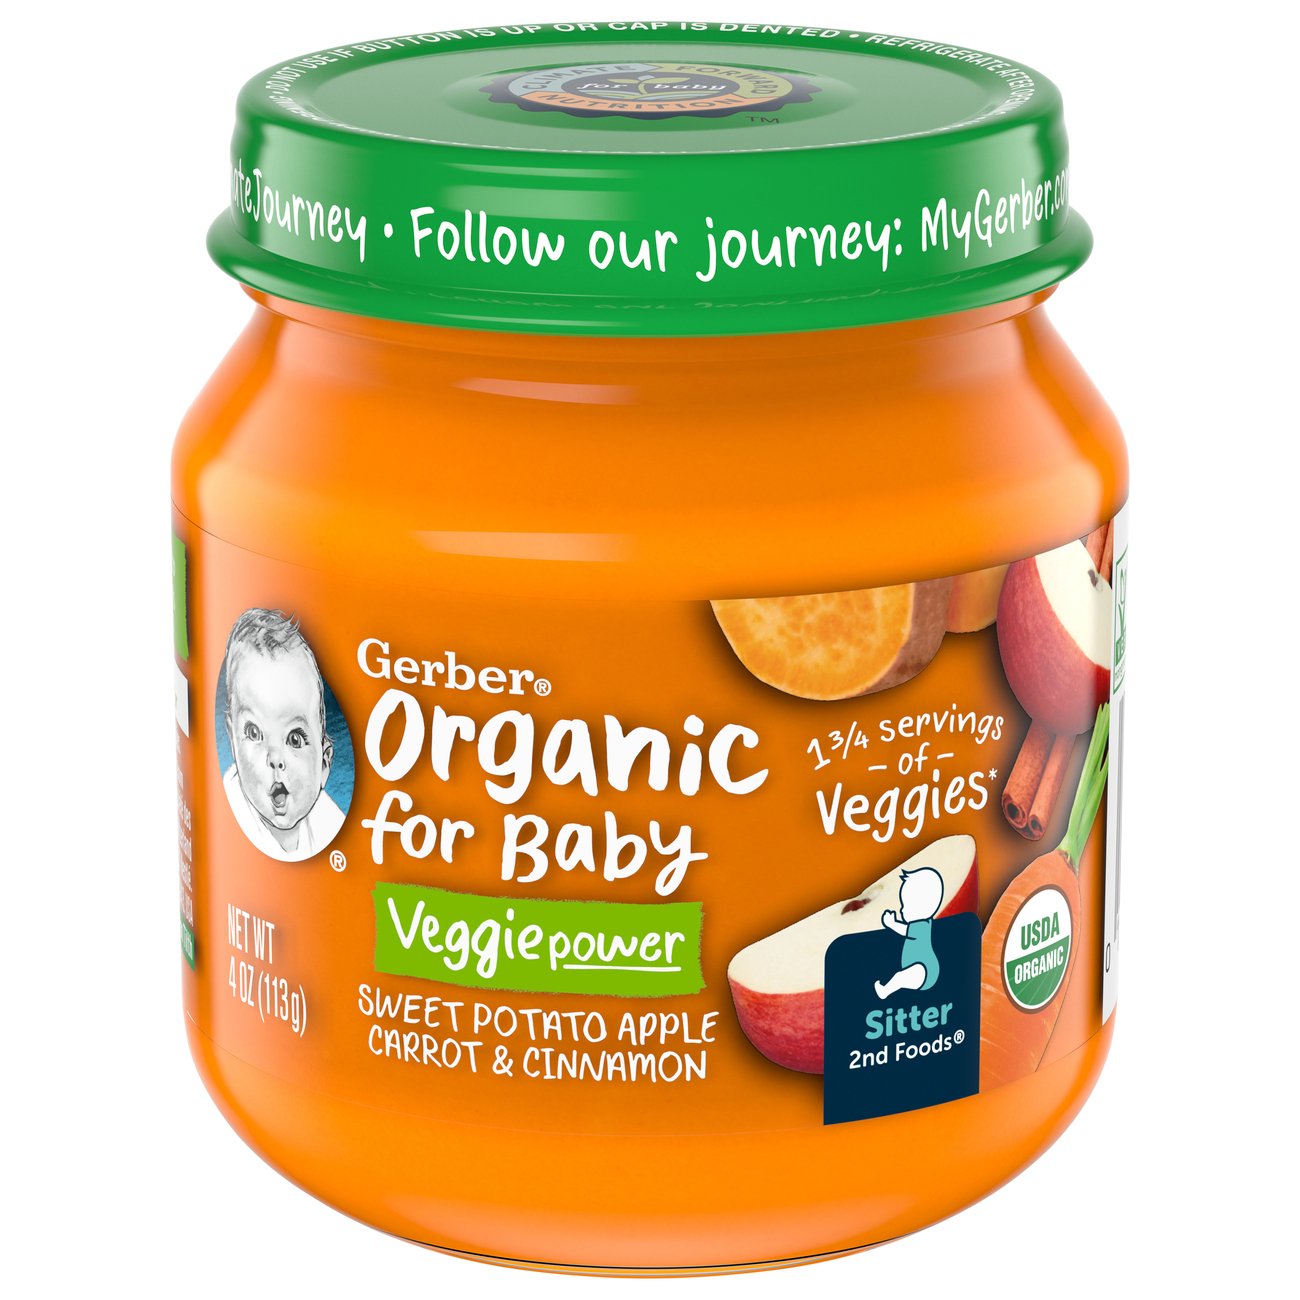 gerber-2nd-foods-organic-sweet-potato-apple-carrot-cinnamon-shop